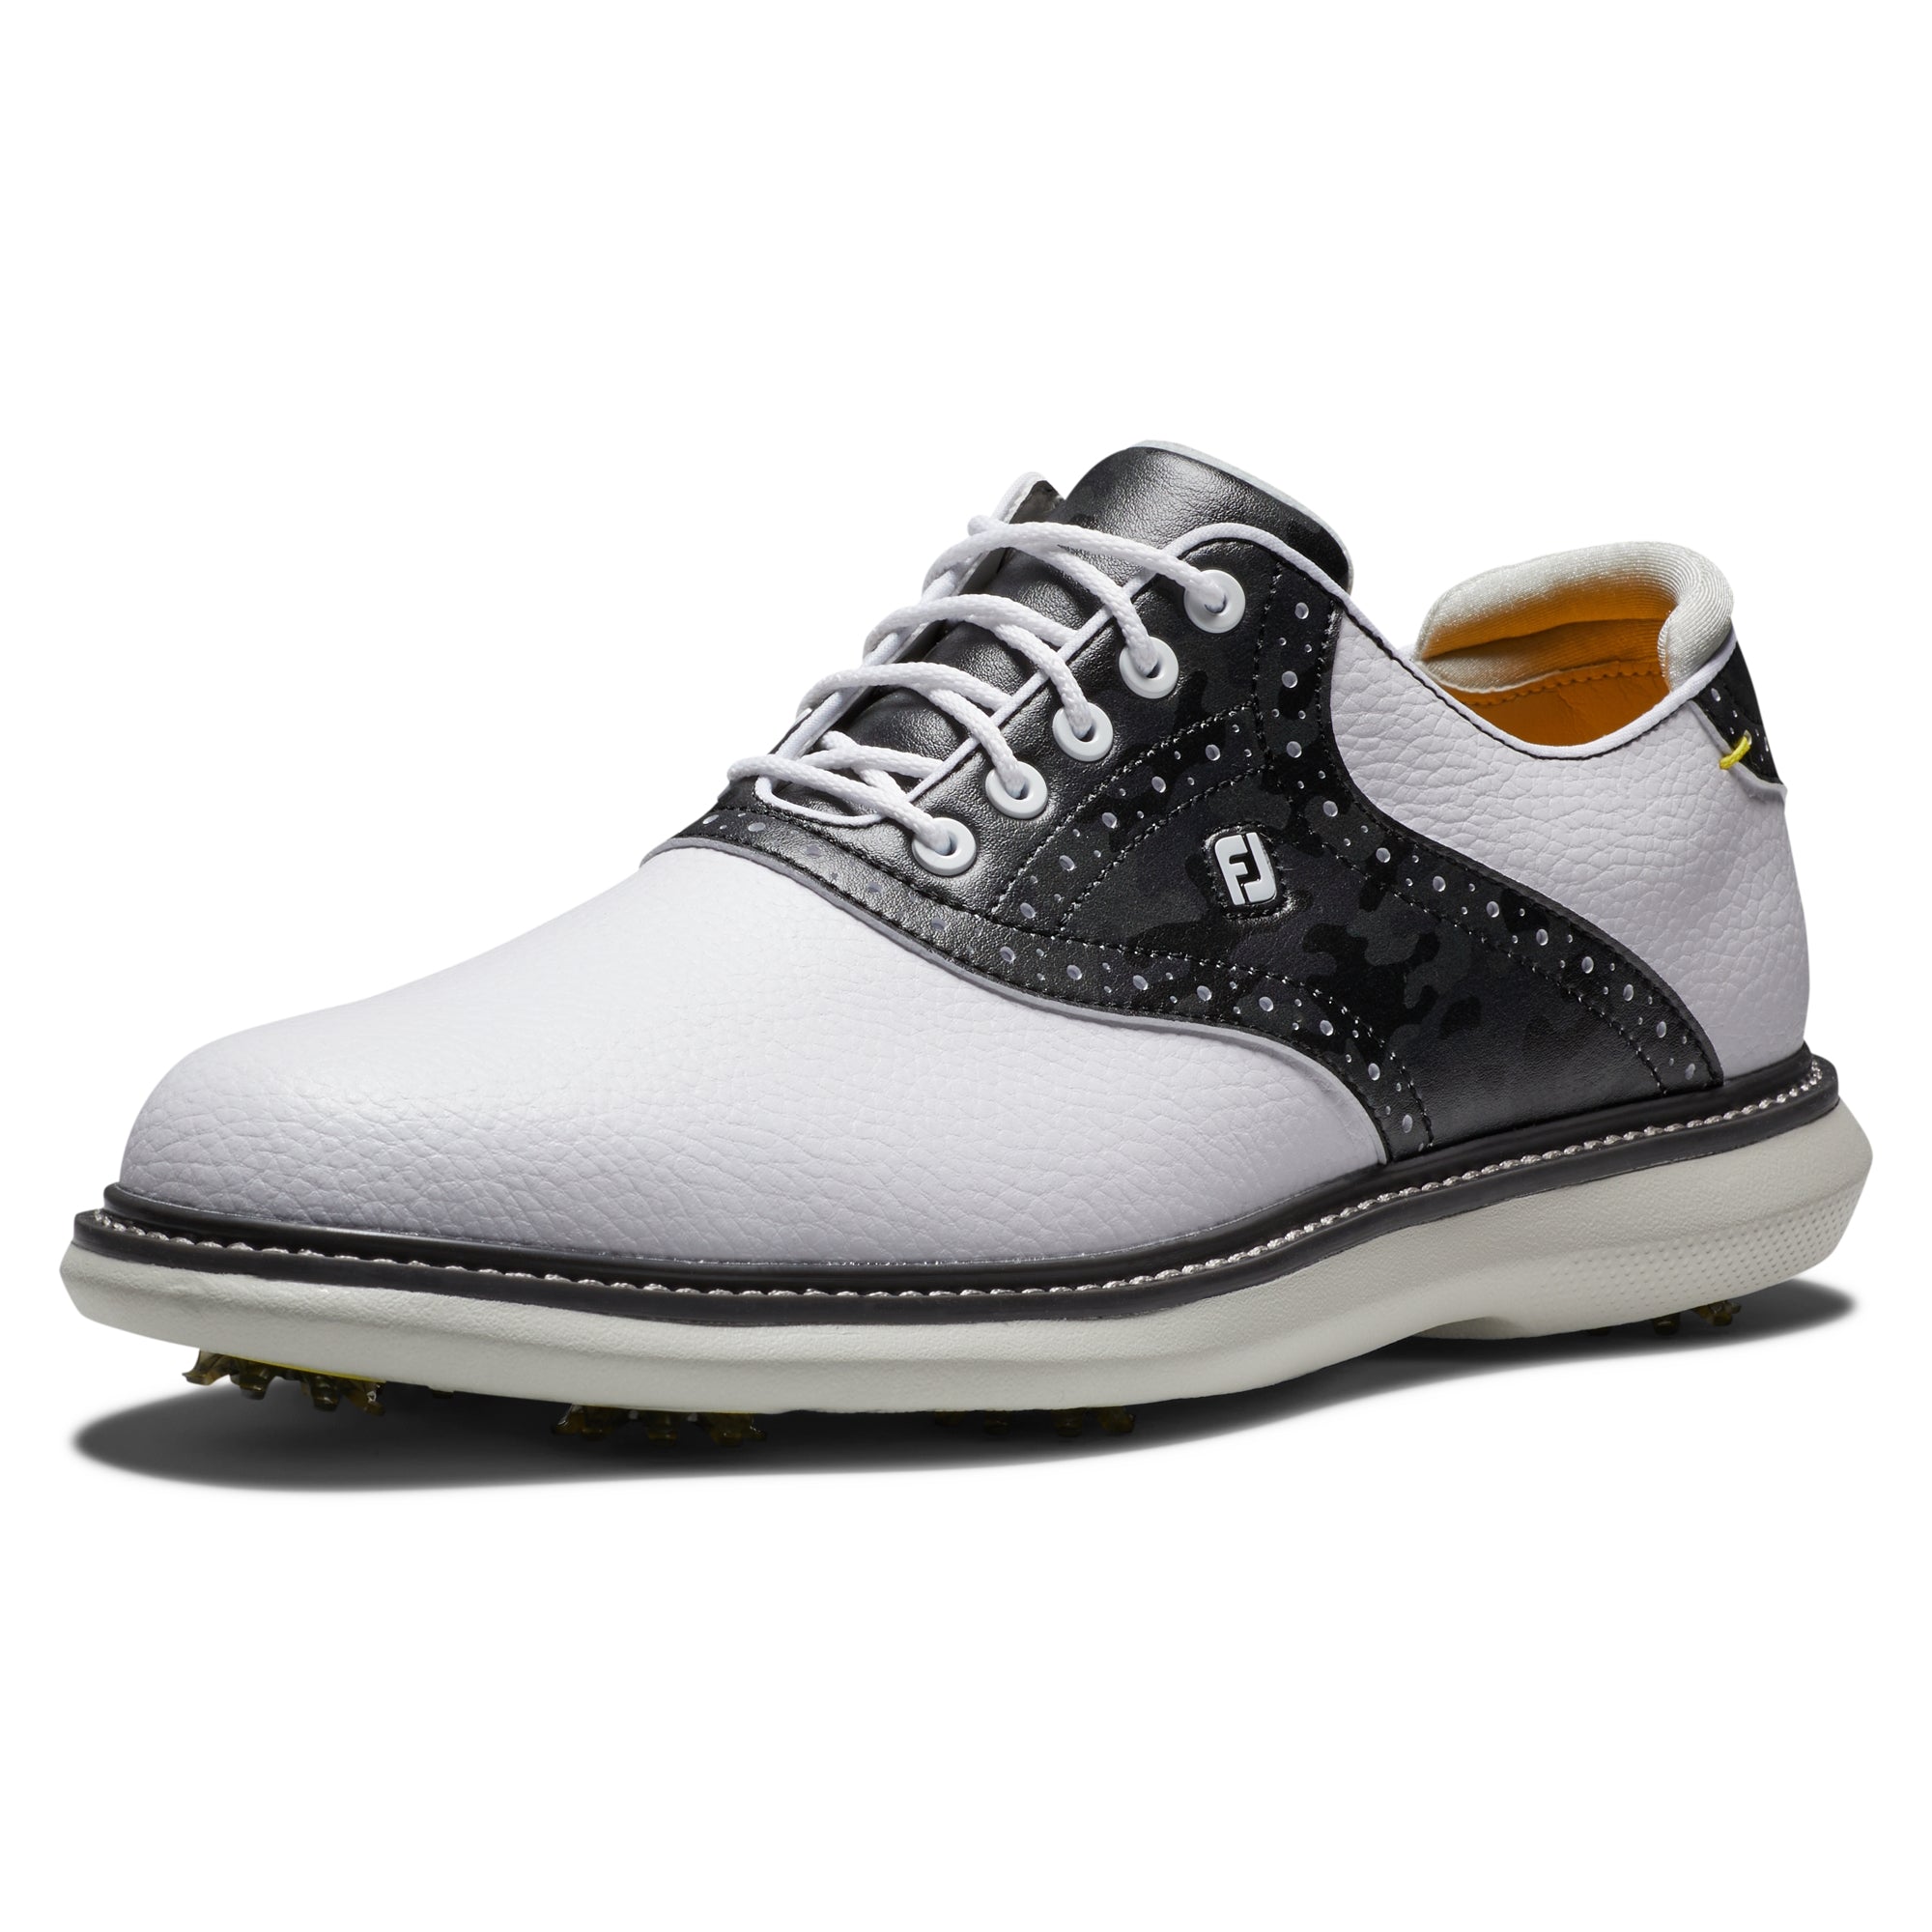 FootJoy Traditions Men's Golf Shoes 57928 - White/Black